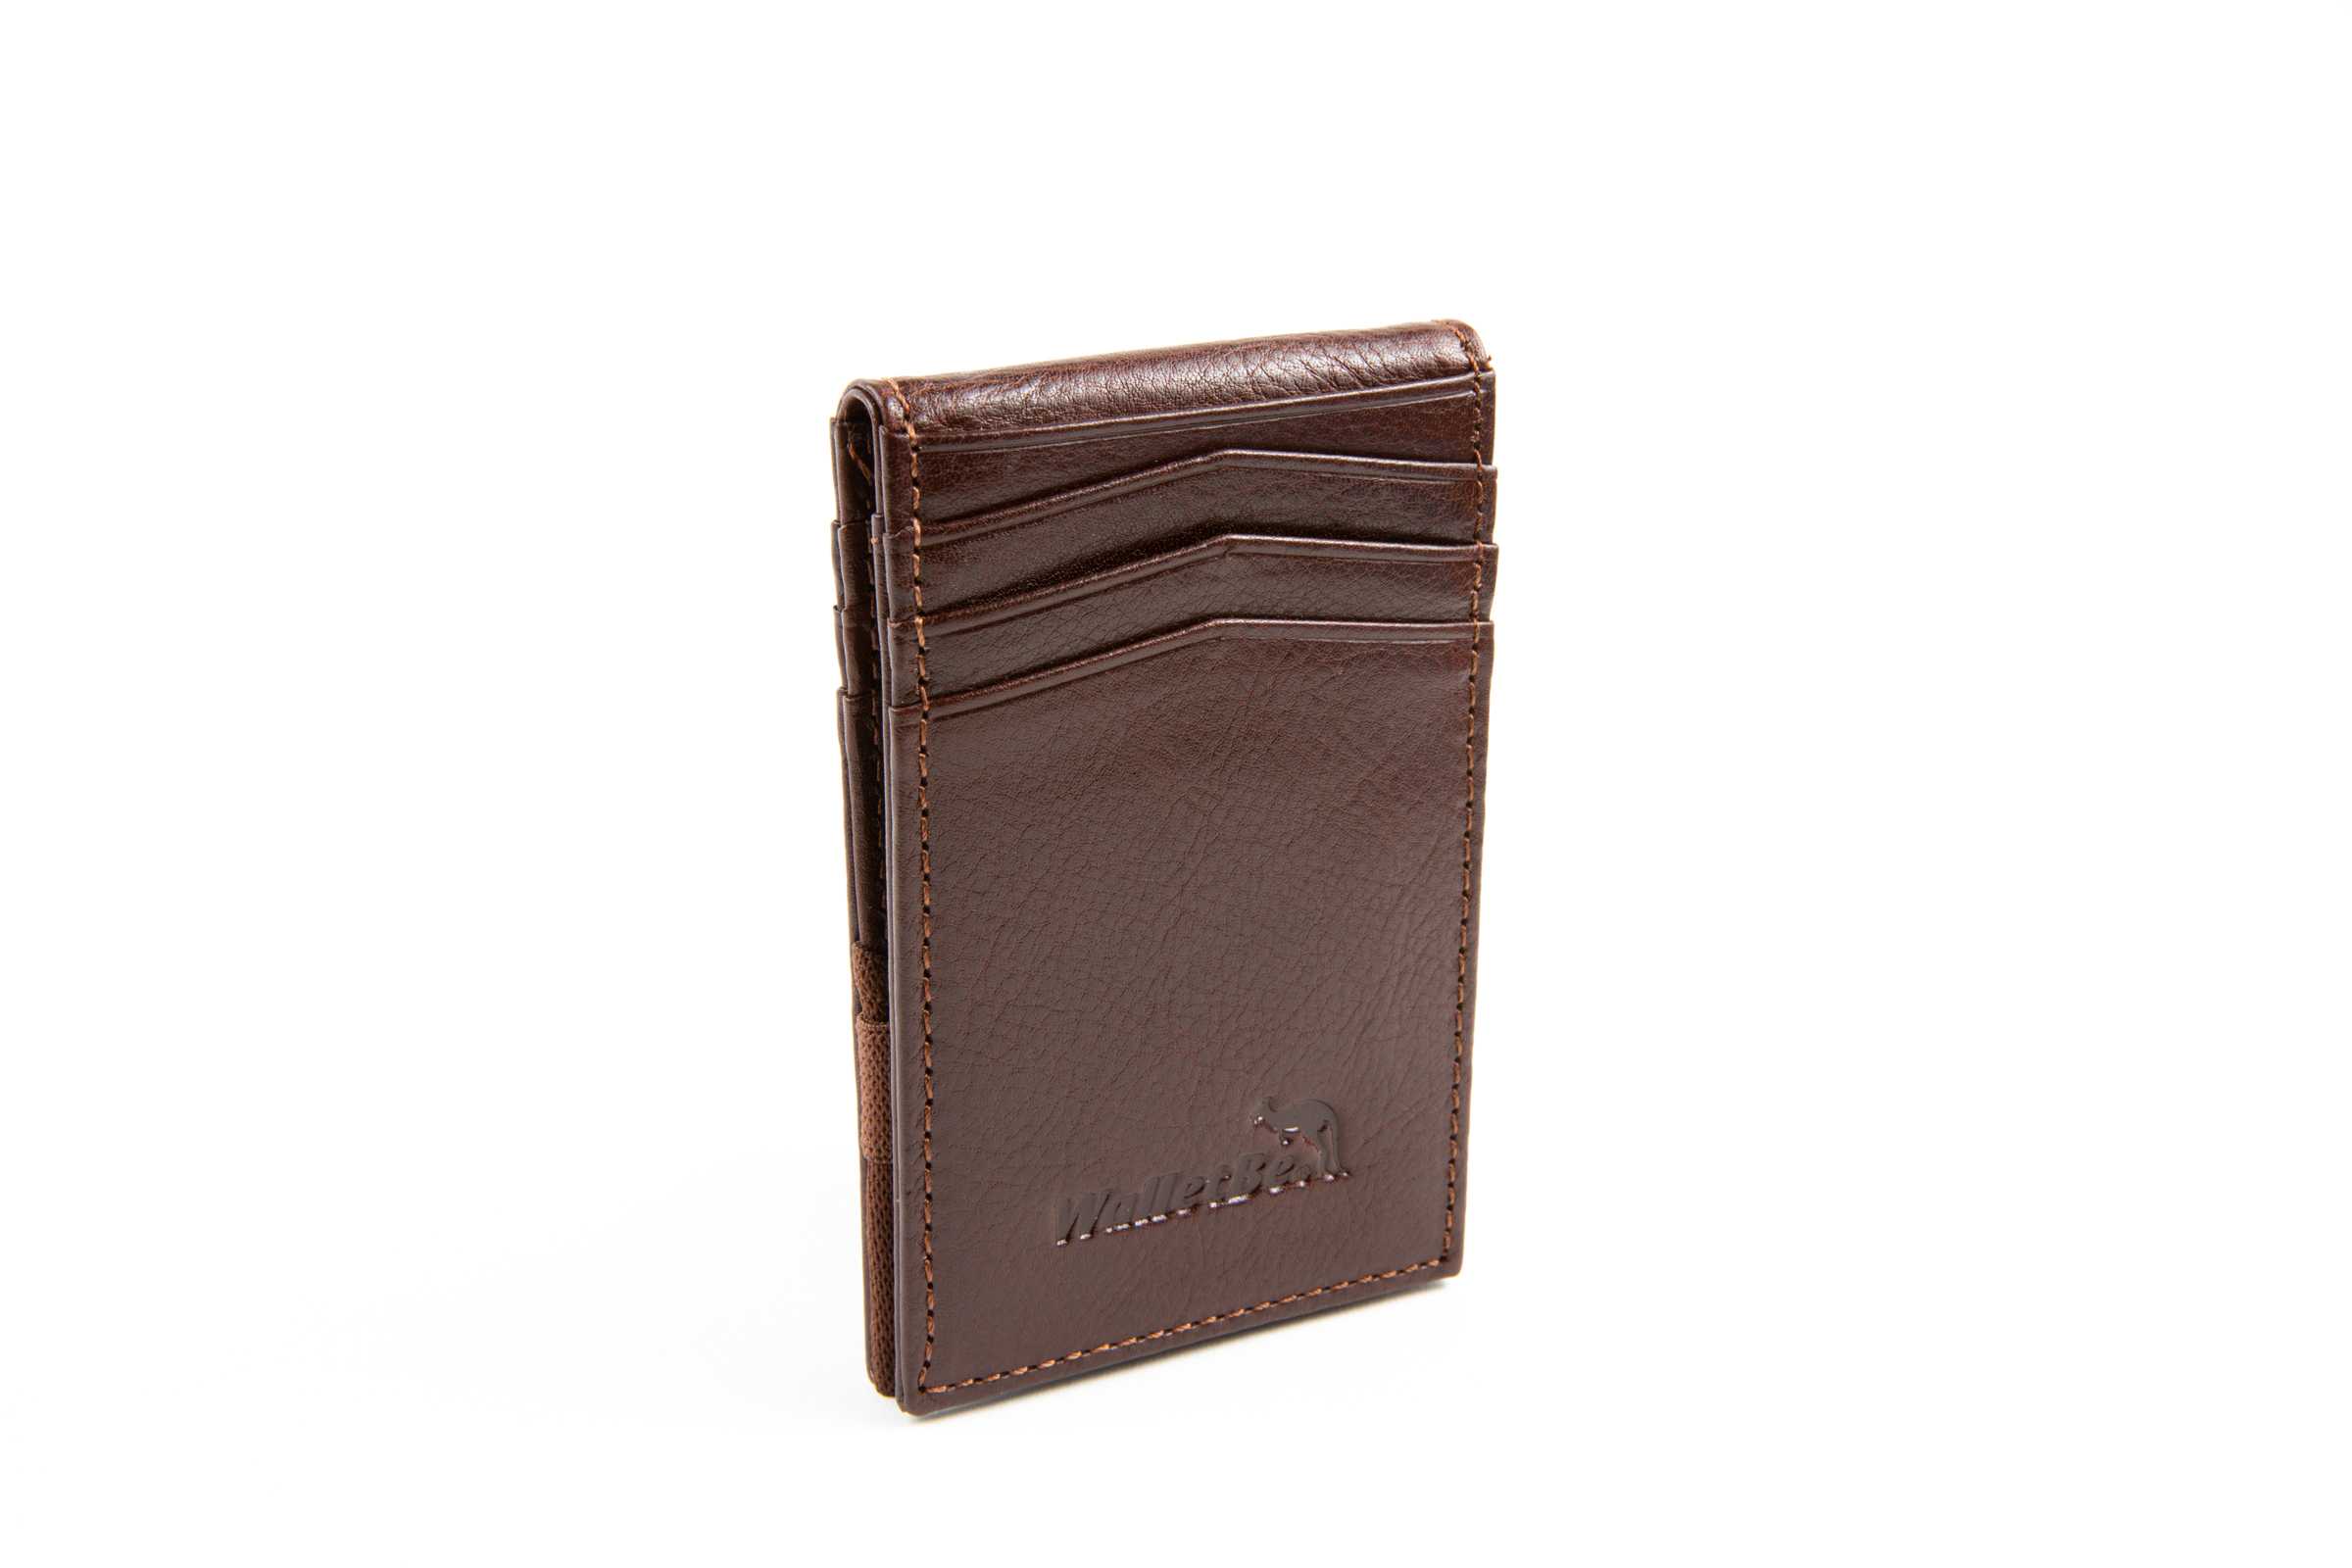 WalletBe Original Front Pocket Wallet Leather Inner ID RFID